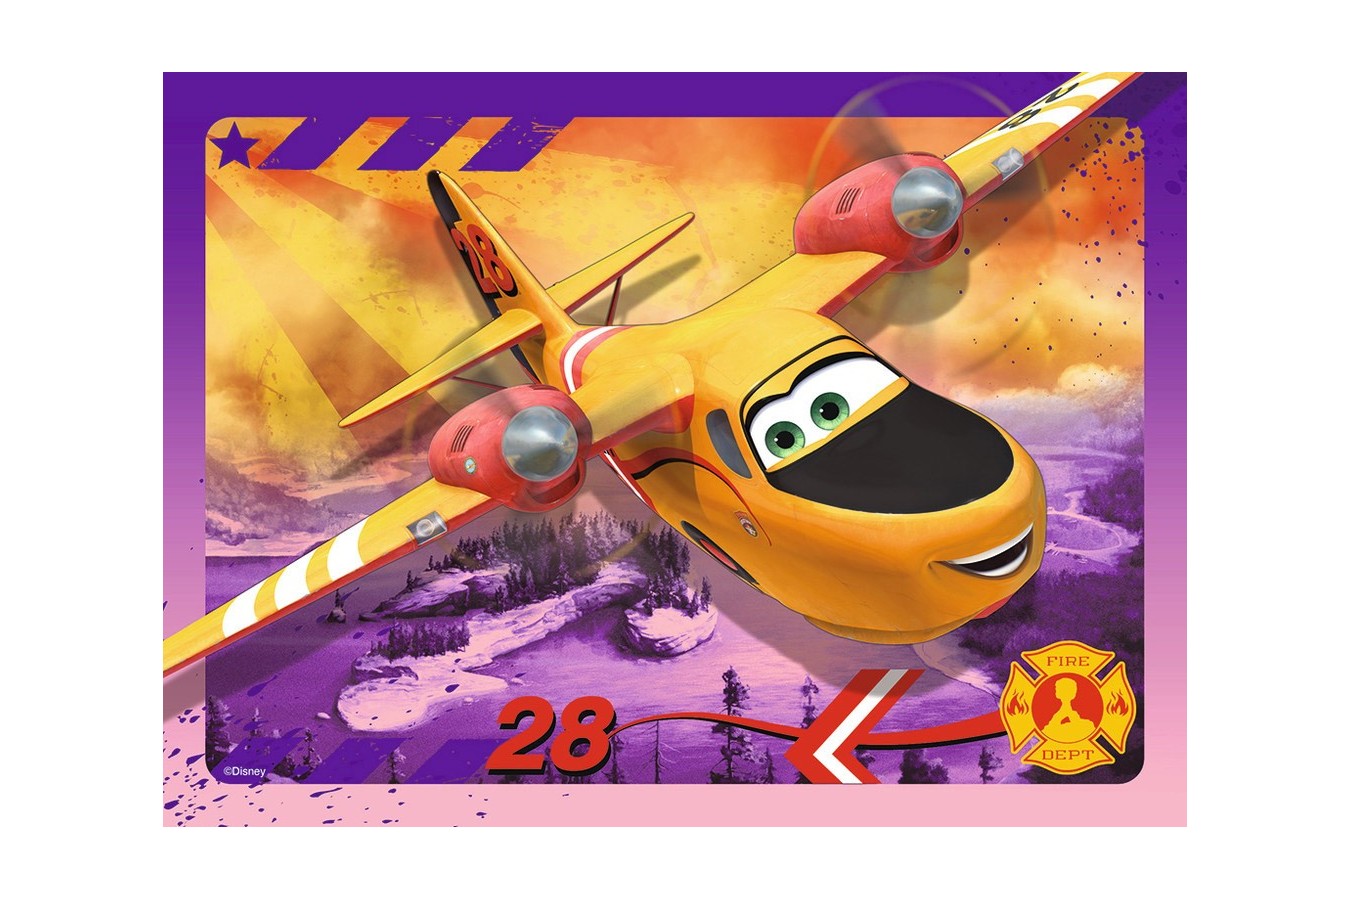 Puzzle Ravensburger - Disney Planes 2, 12/16/20/24 piese (07357)